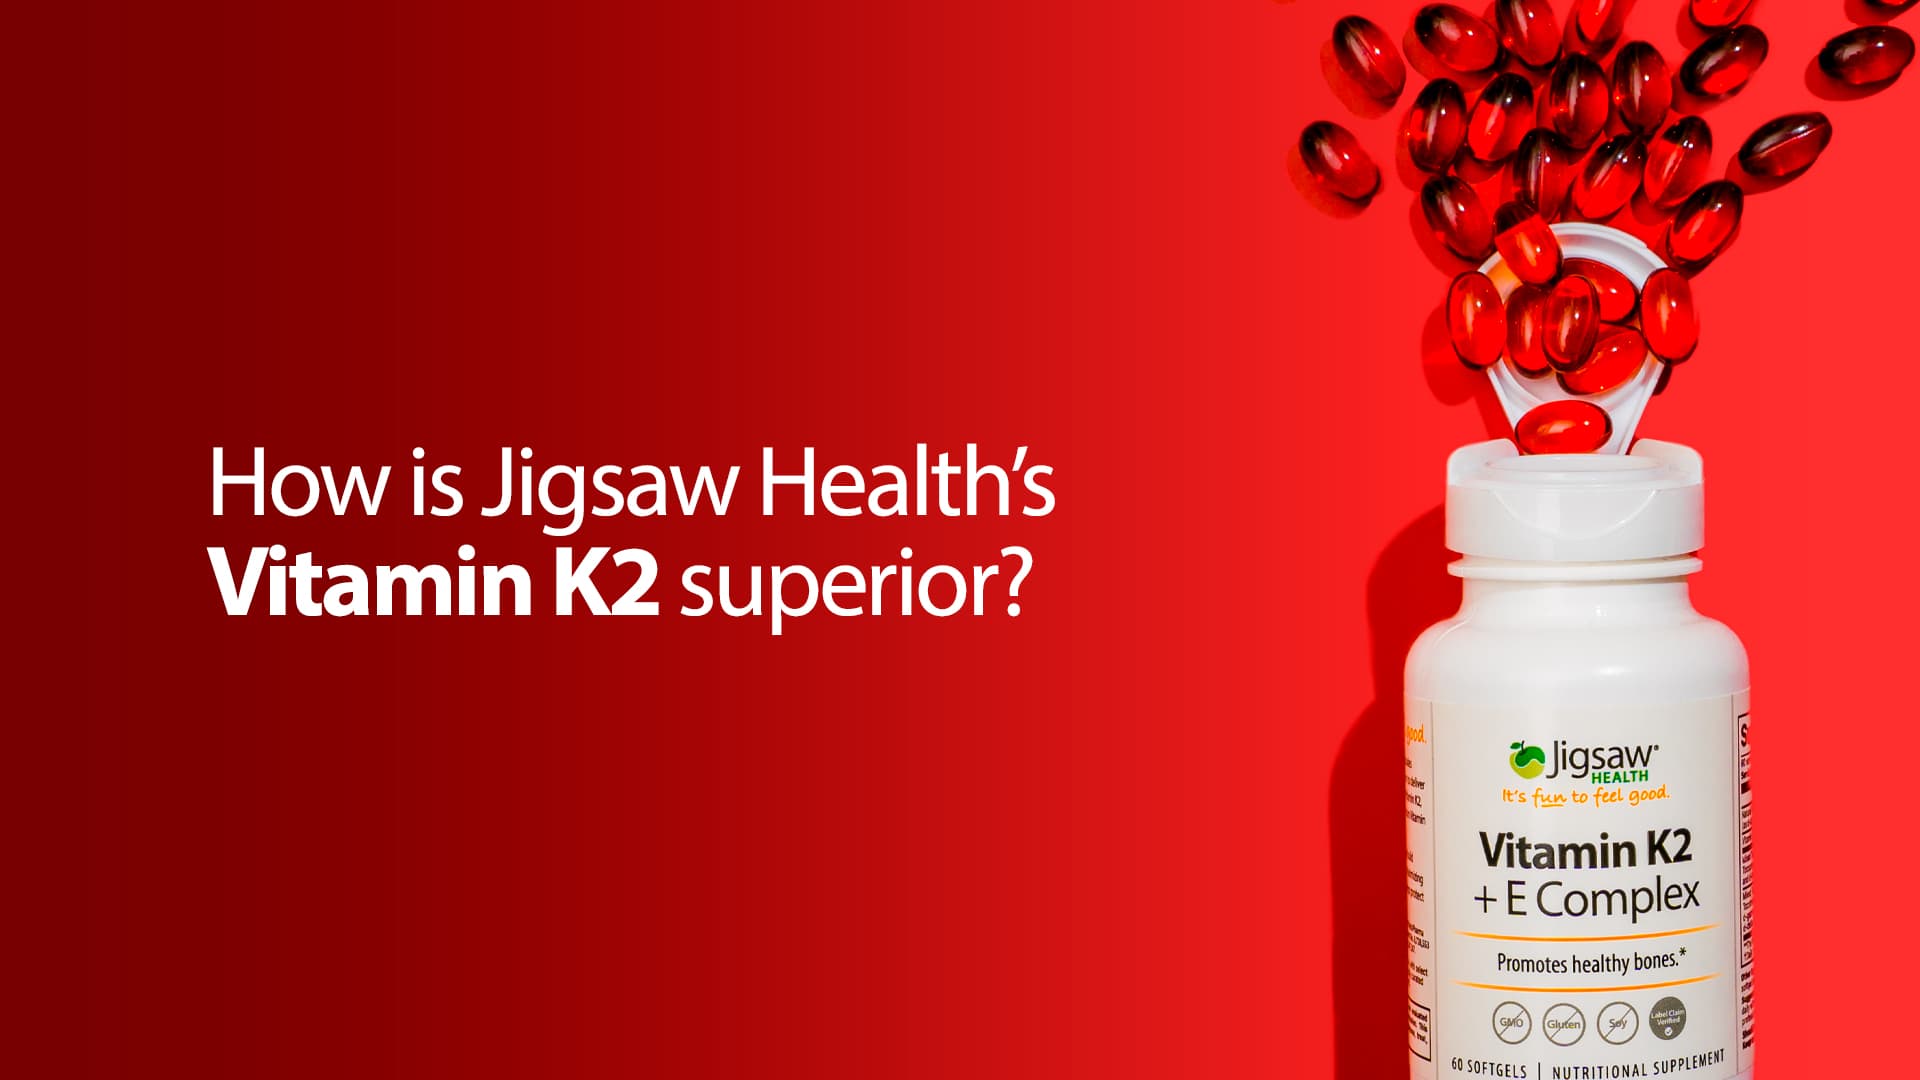 How is Jigsaw Vitamin K2 + E Complex Superior?